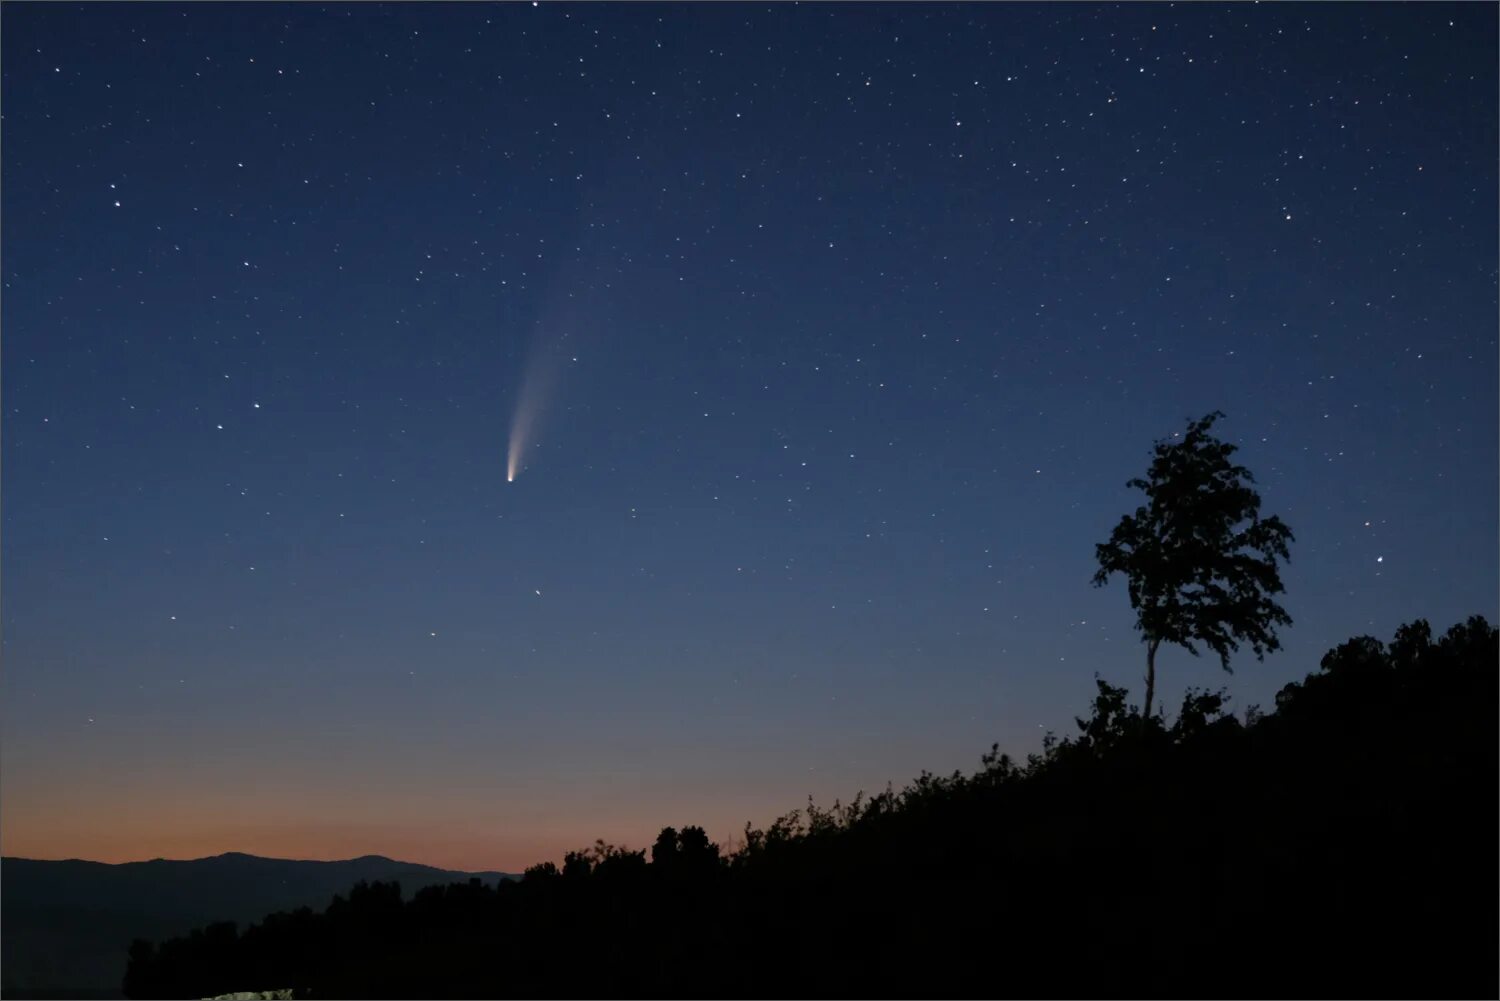 Комета в хабаровске сегодня. Комета неовайз. Комета в ночном небе. Ночное небо с кометой. Комета вечером.